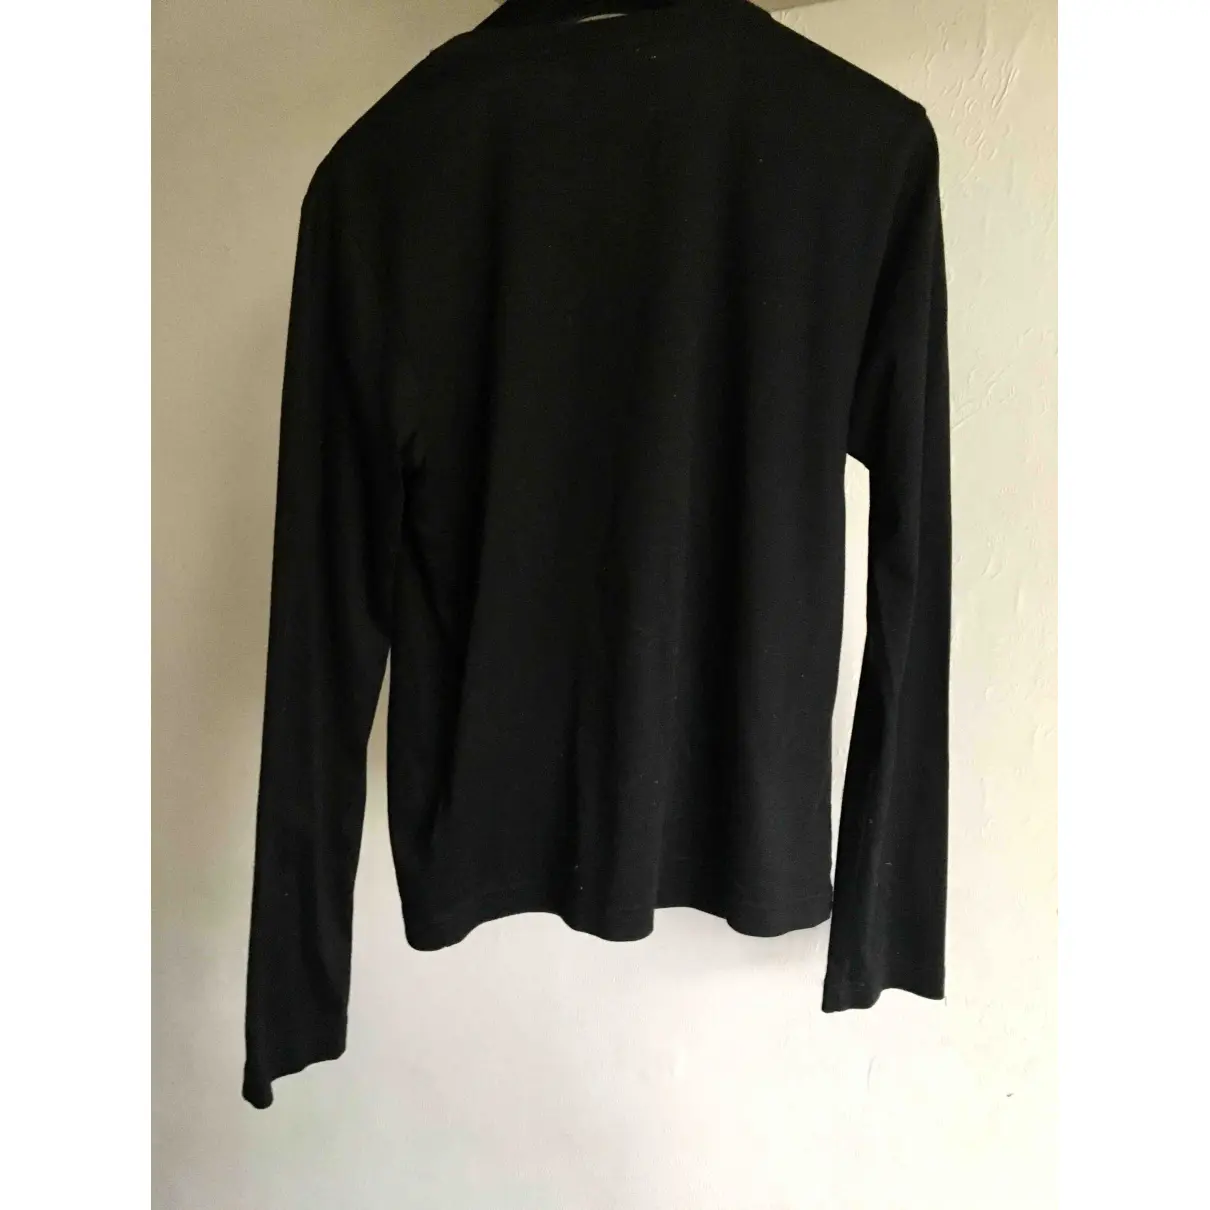 Buy Noir Kei Ninomiya Black Cotton Top online